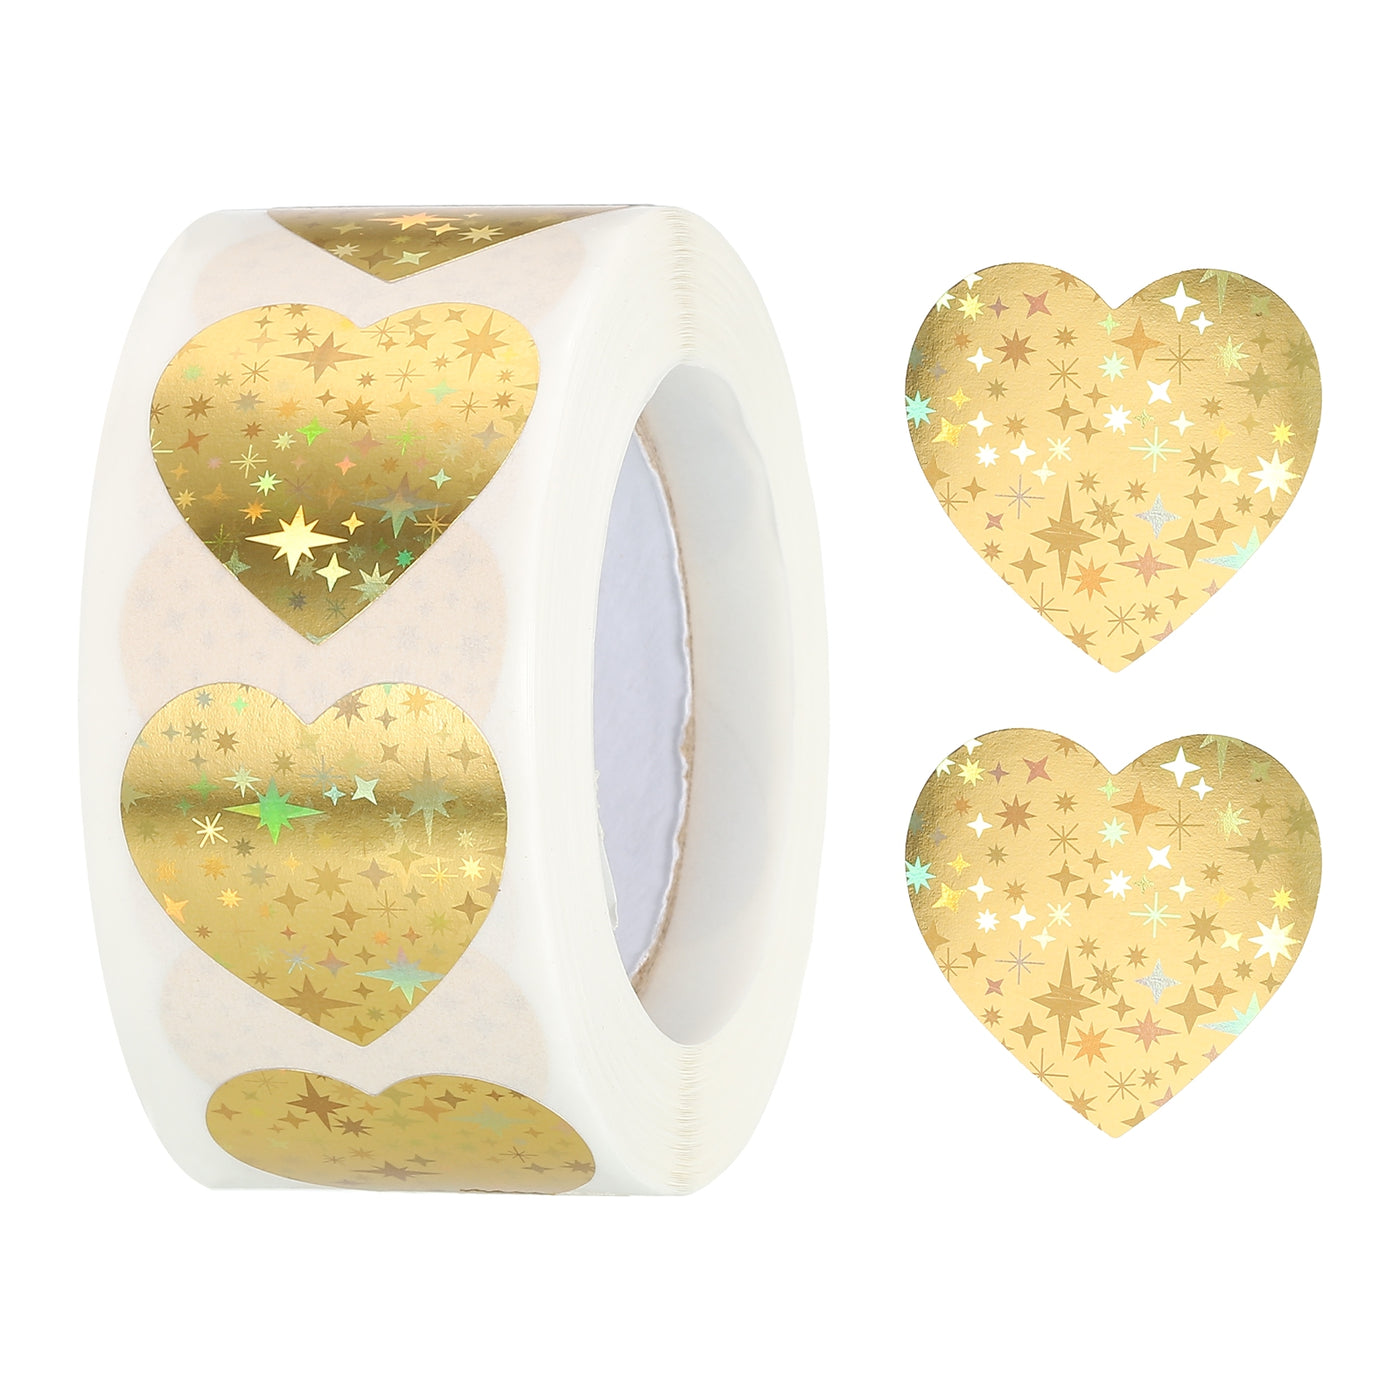 Harfington Heart Shaped Sticker 1" Self-Adhesive Love Label Star Golden 500 Pcs